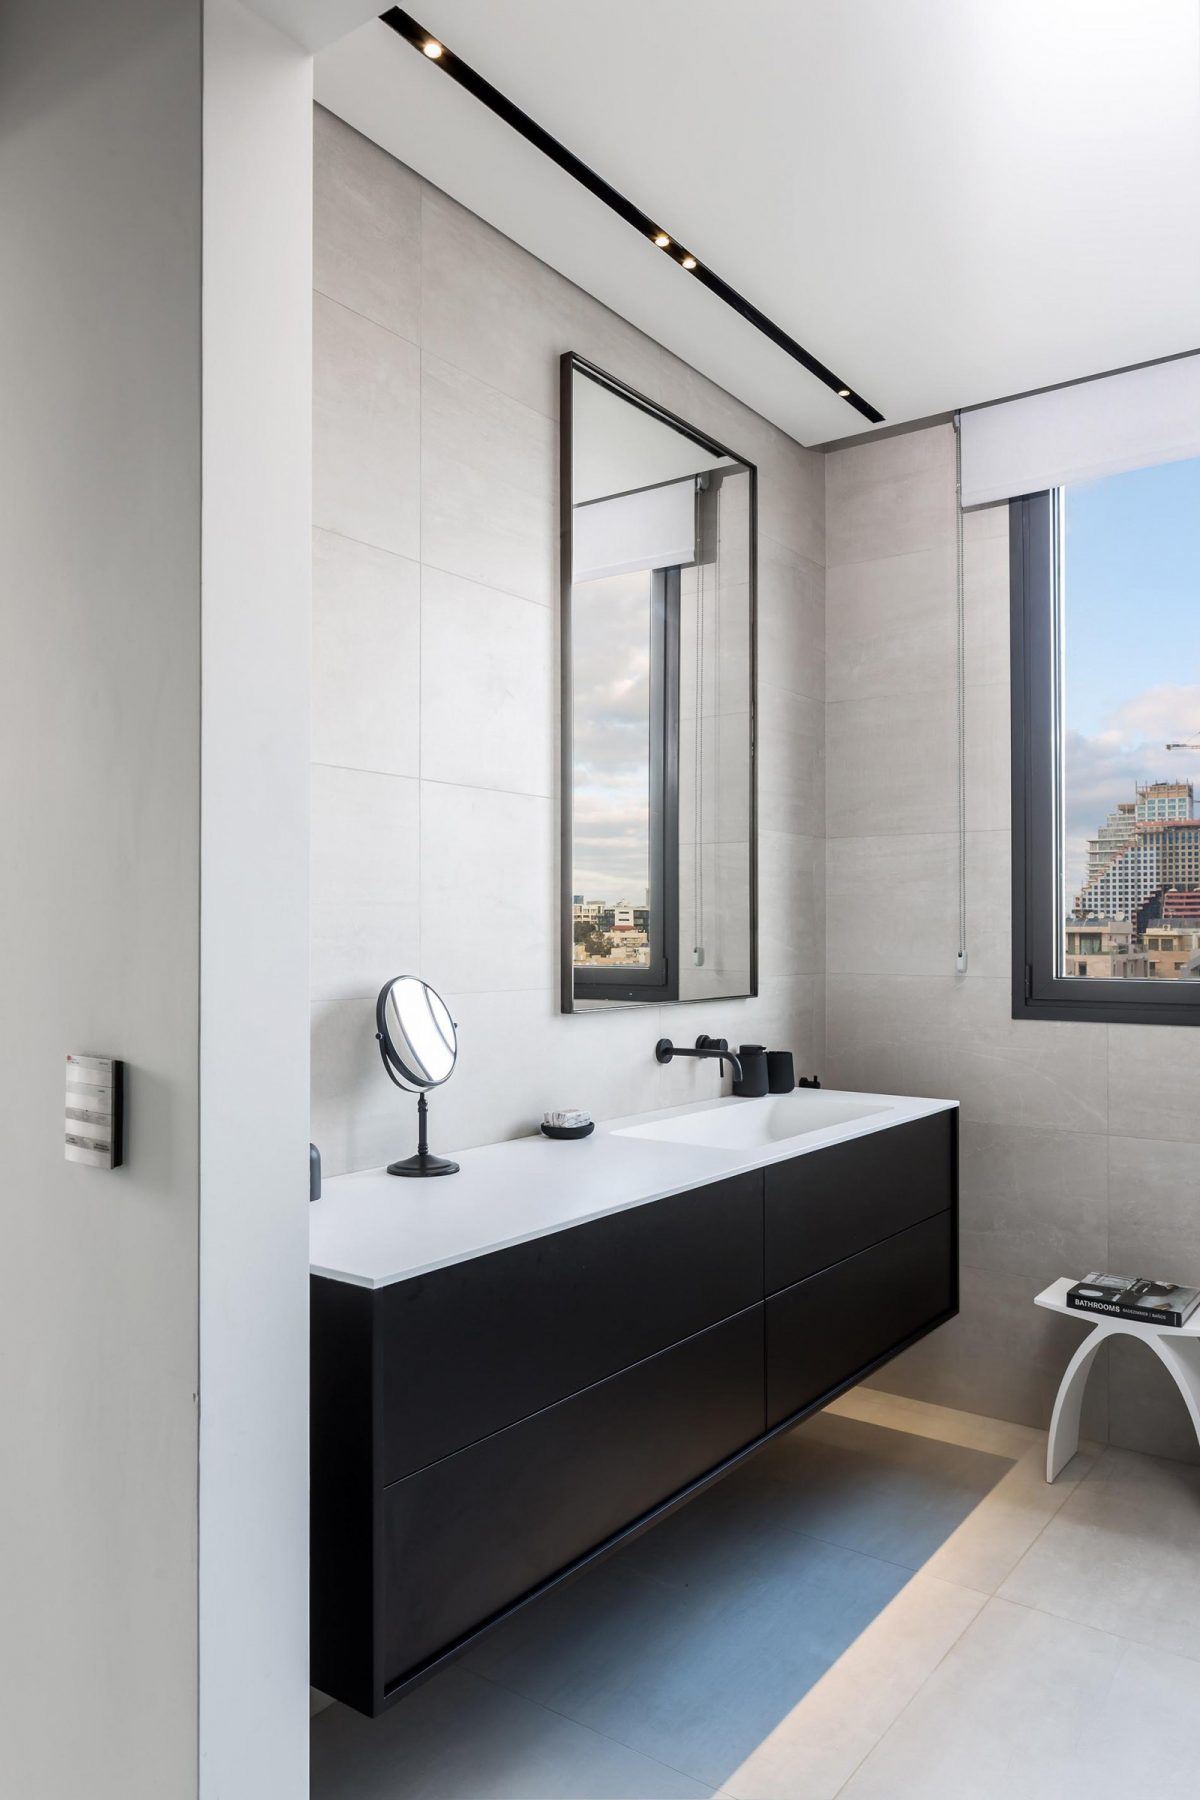 Penthouse Carmelit עיצוב תאורת תקרה באמבטיה על ידי דורי קמחי